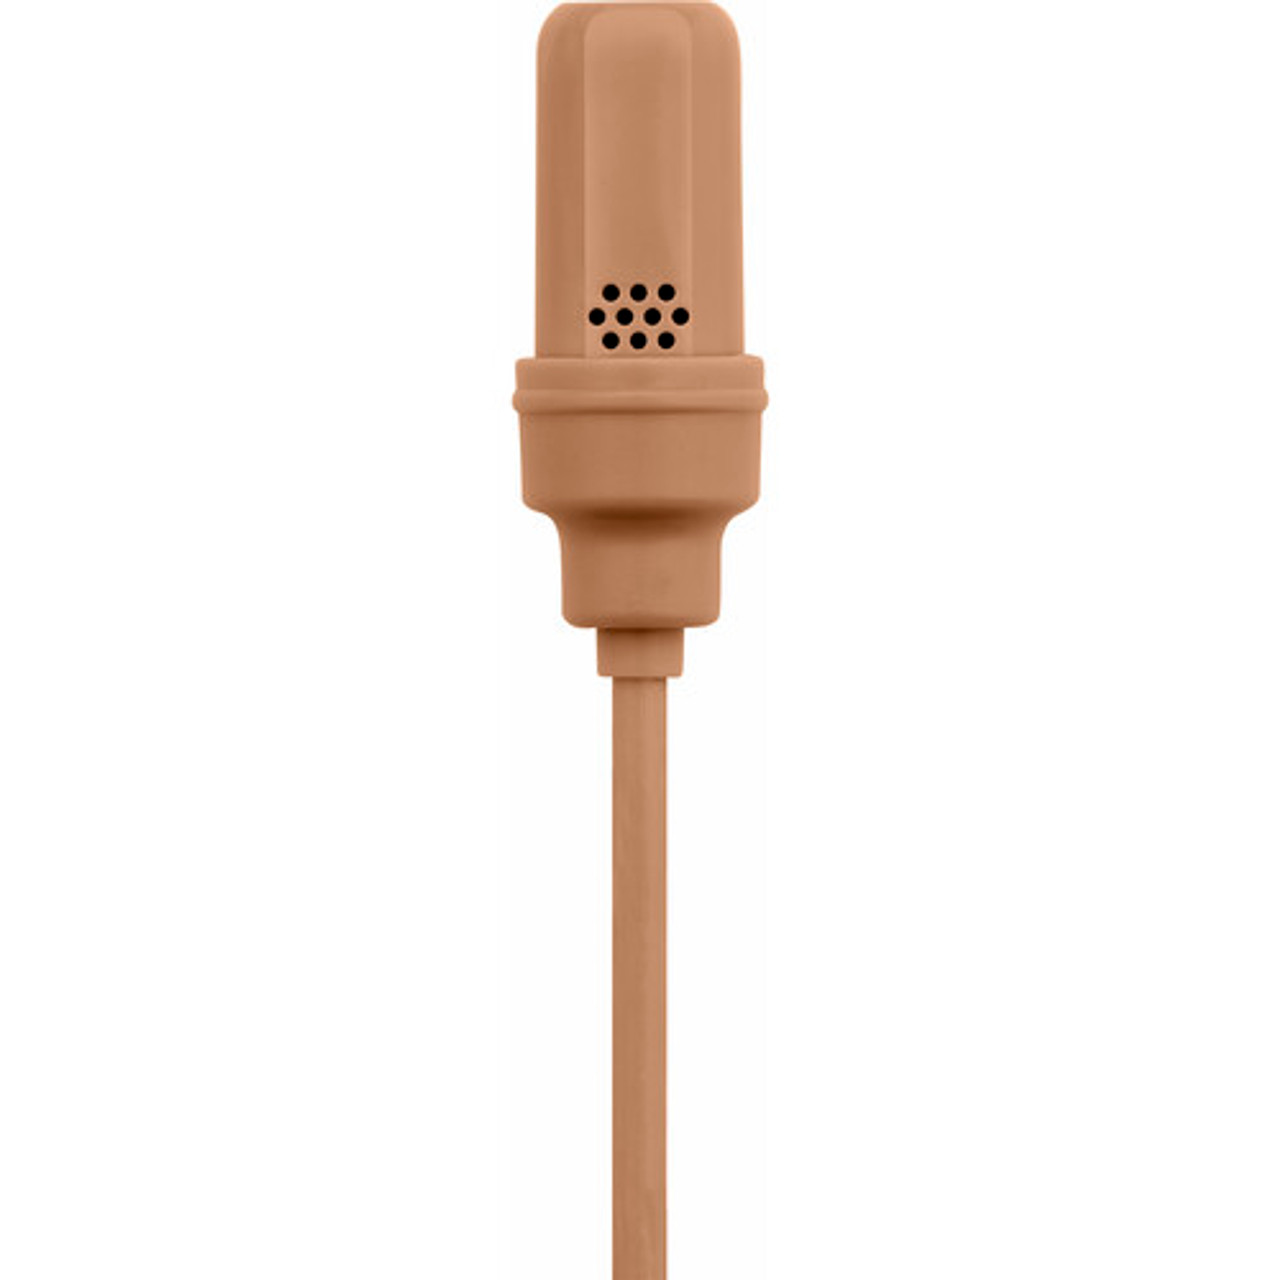 Shure UL4C/C-MTQG-A UniPlex Cardioid Subminiature Lavalier Microphone for Bodypack Transmitter